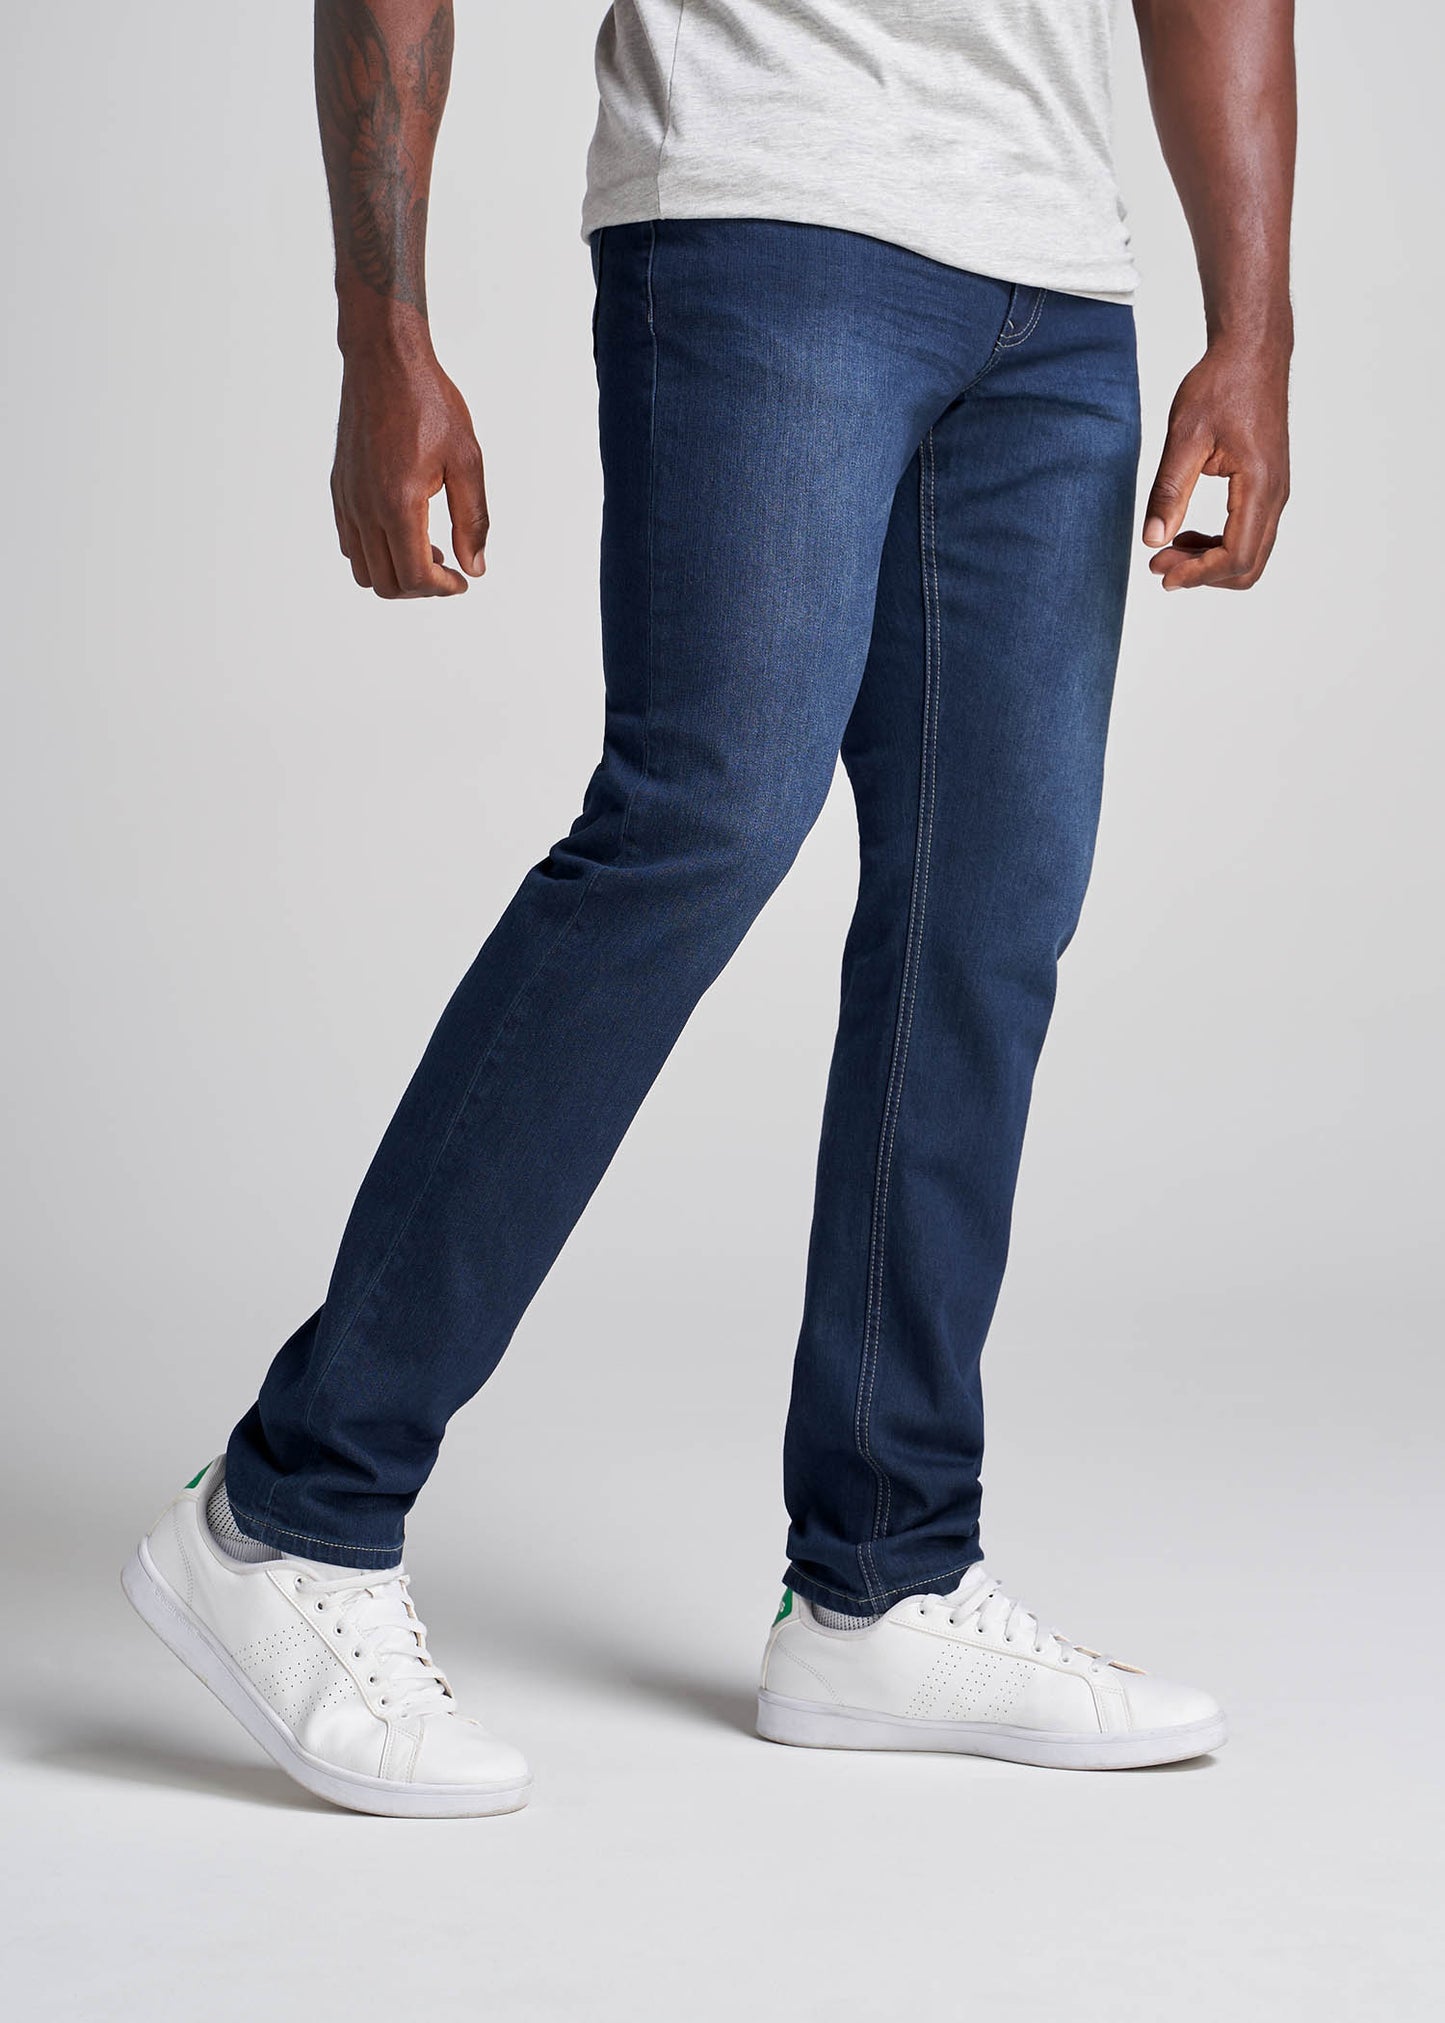 American_Tall_Men_CarmanTaperedFit_BlueSteel_Tall_Men_s_Jeans-Front